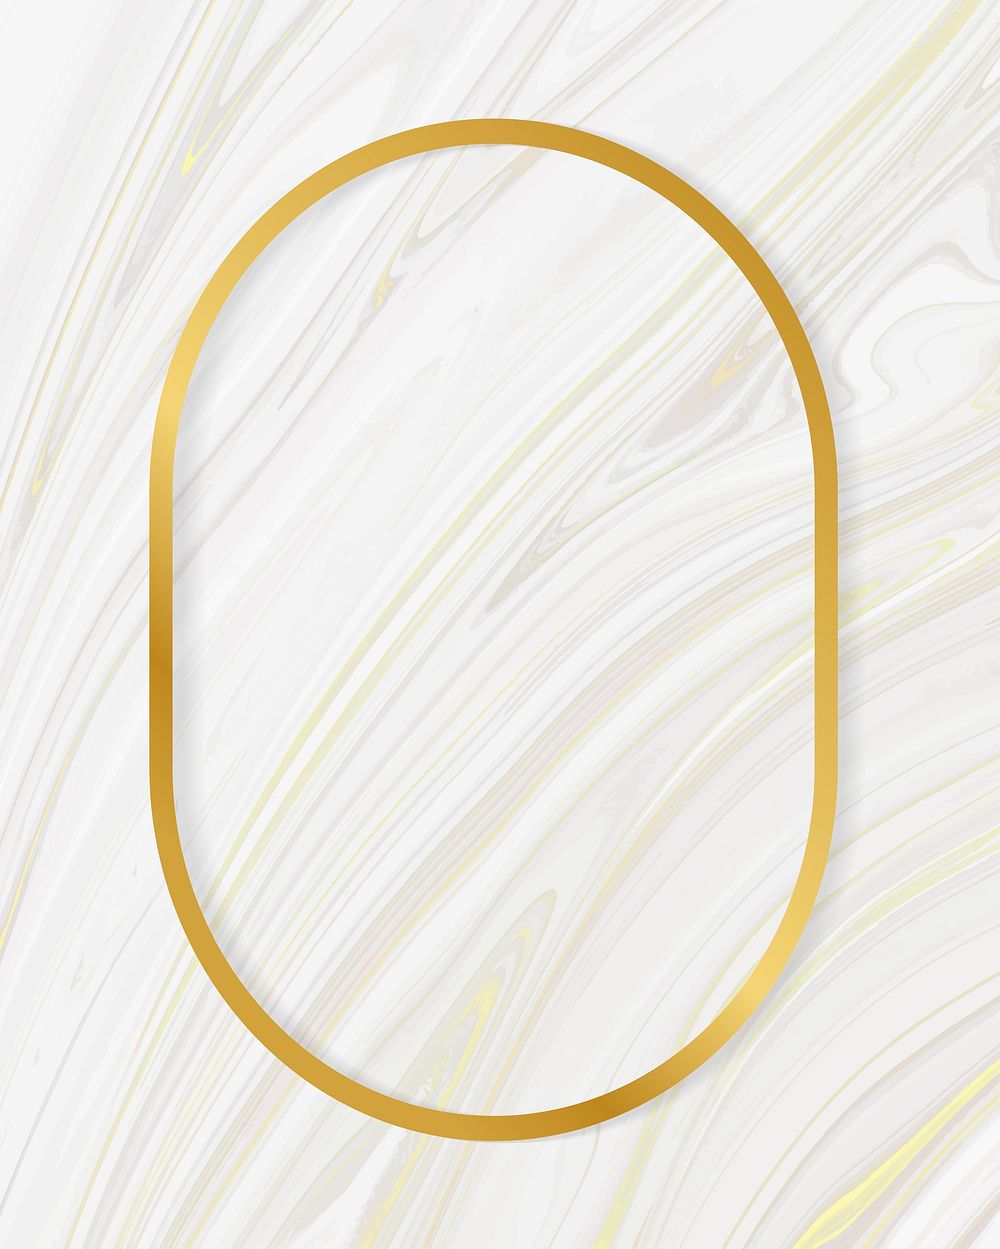 Golden framed oval on a liquid marble textured vector